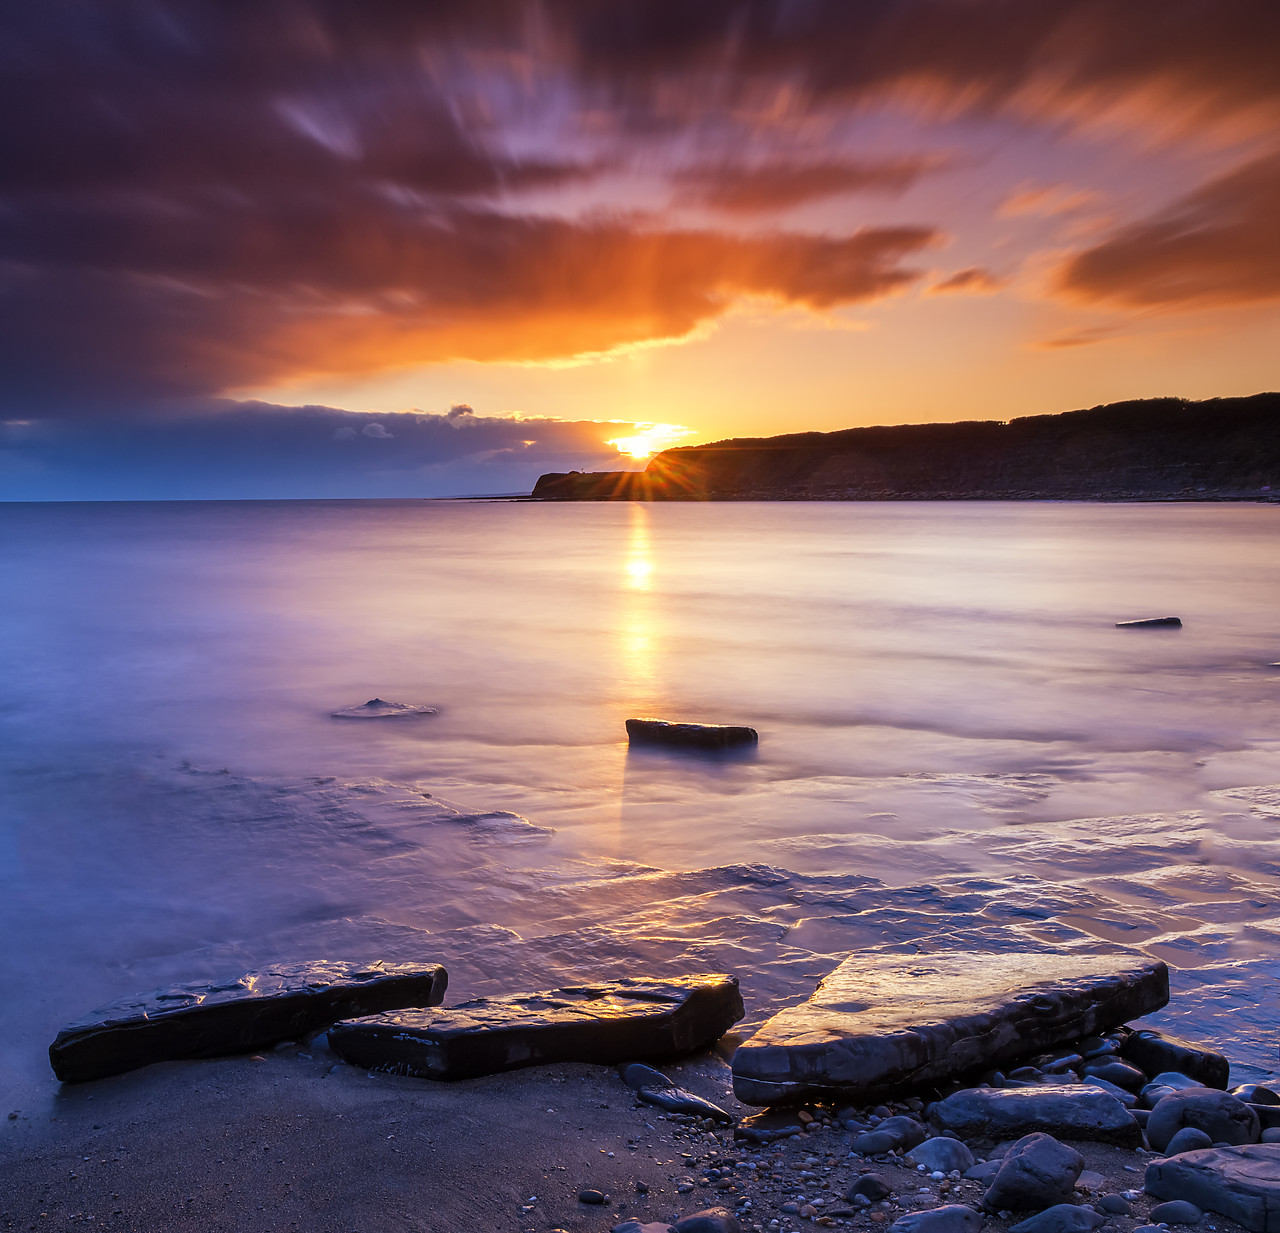 #180131-1 - Kimmeridge Bay at Sunset, Dorset, England